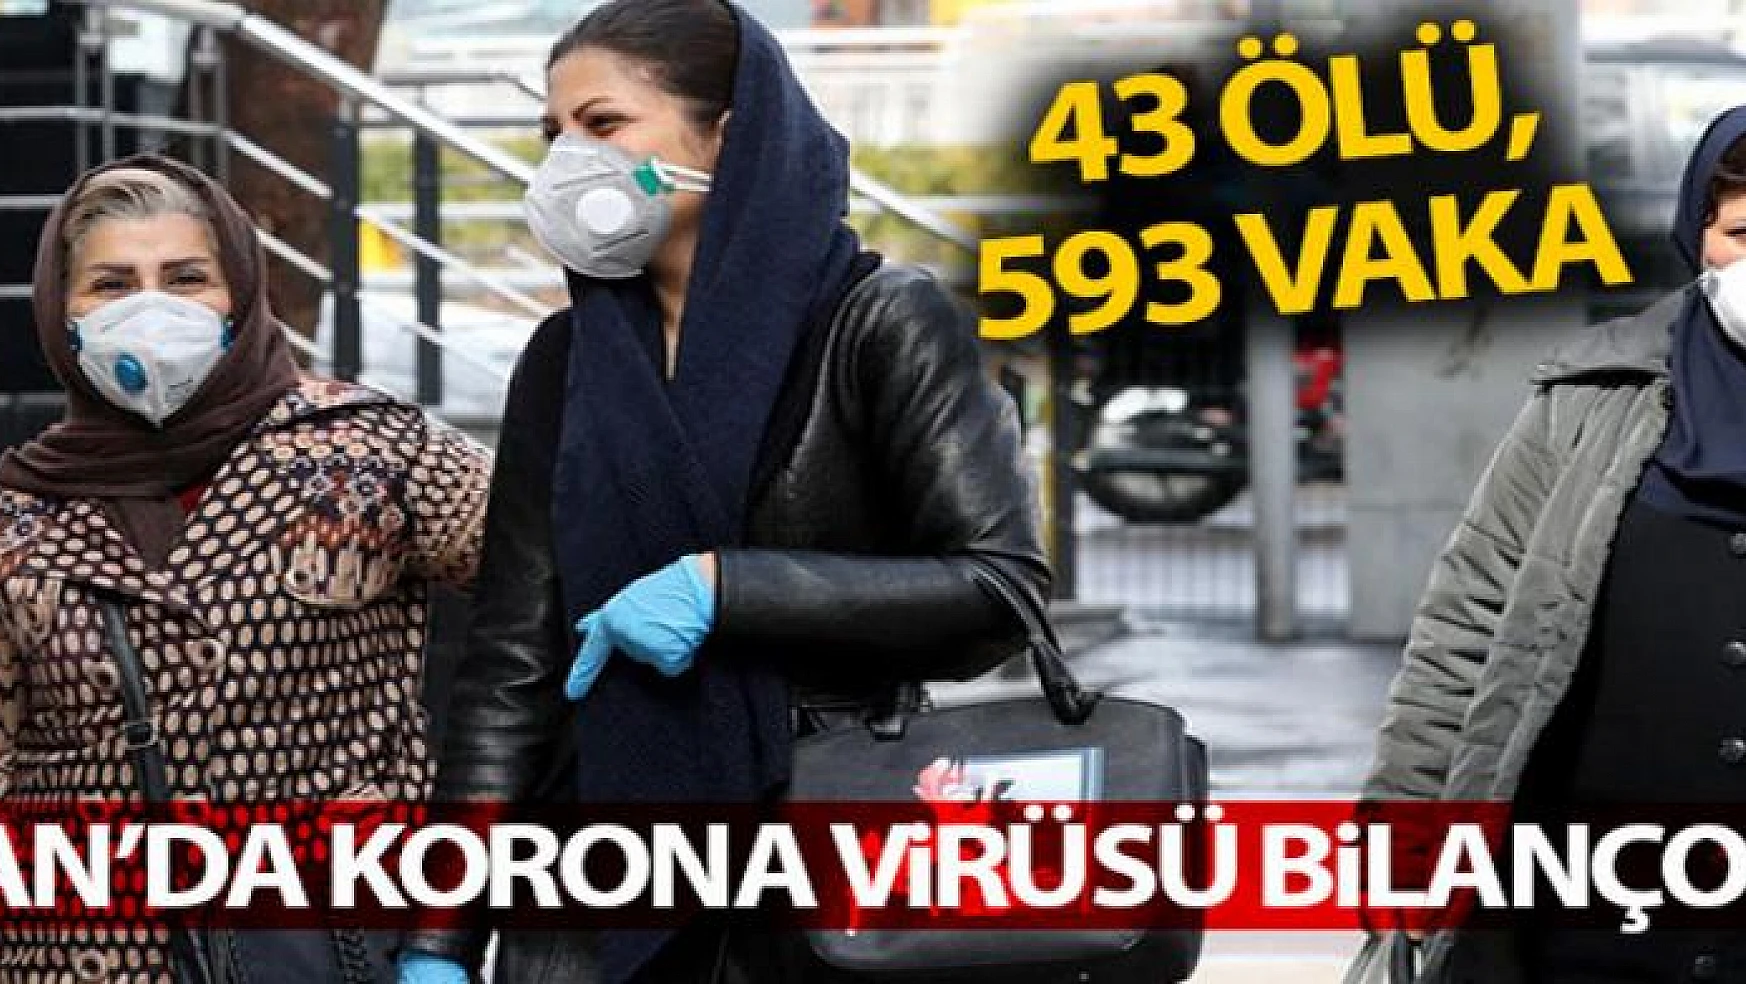 İran'da korona virüsü bilançosu: 43 ölü, 593 vaka